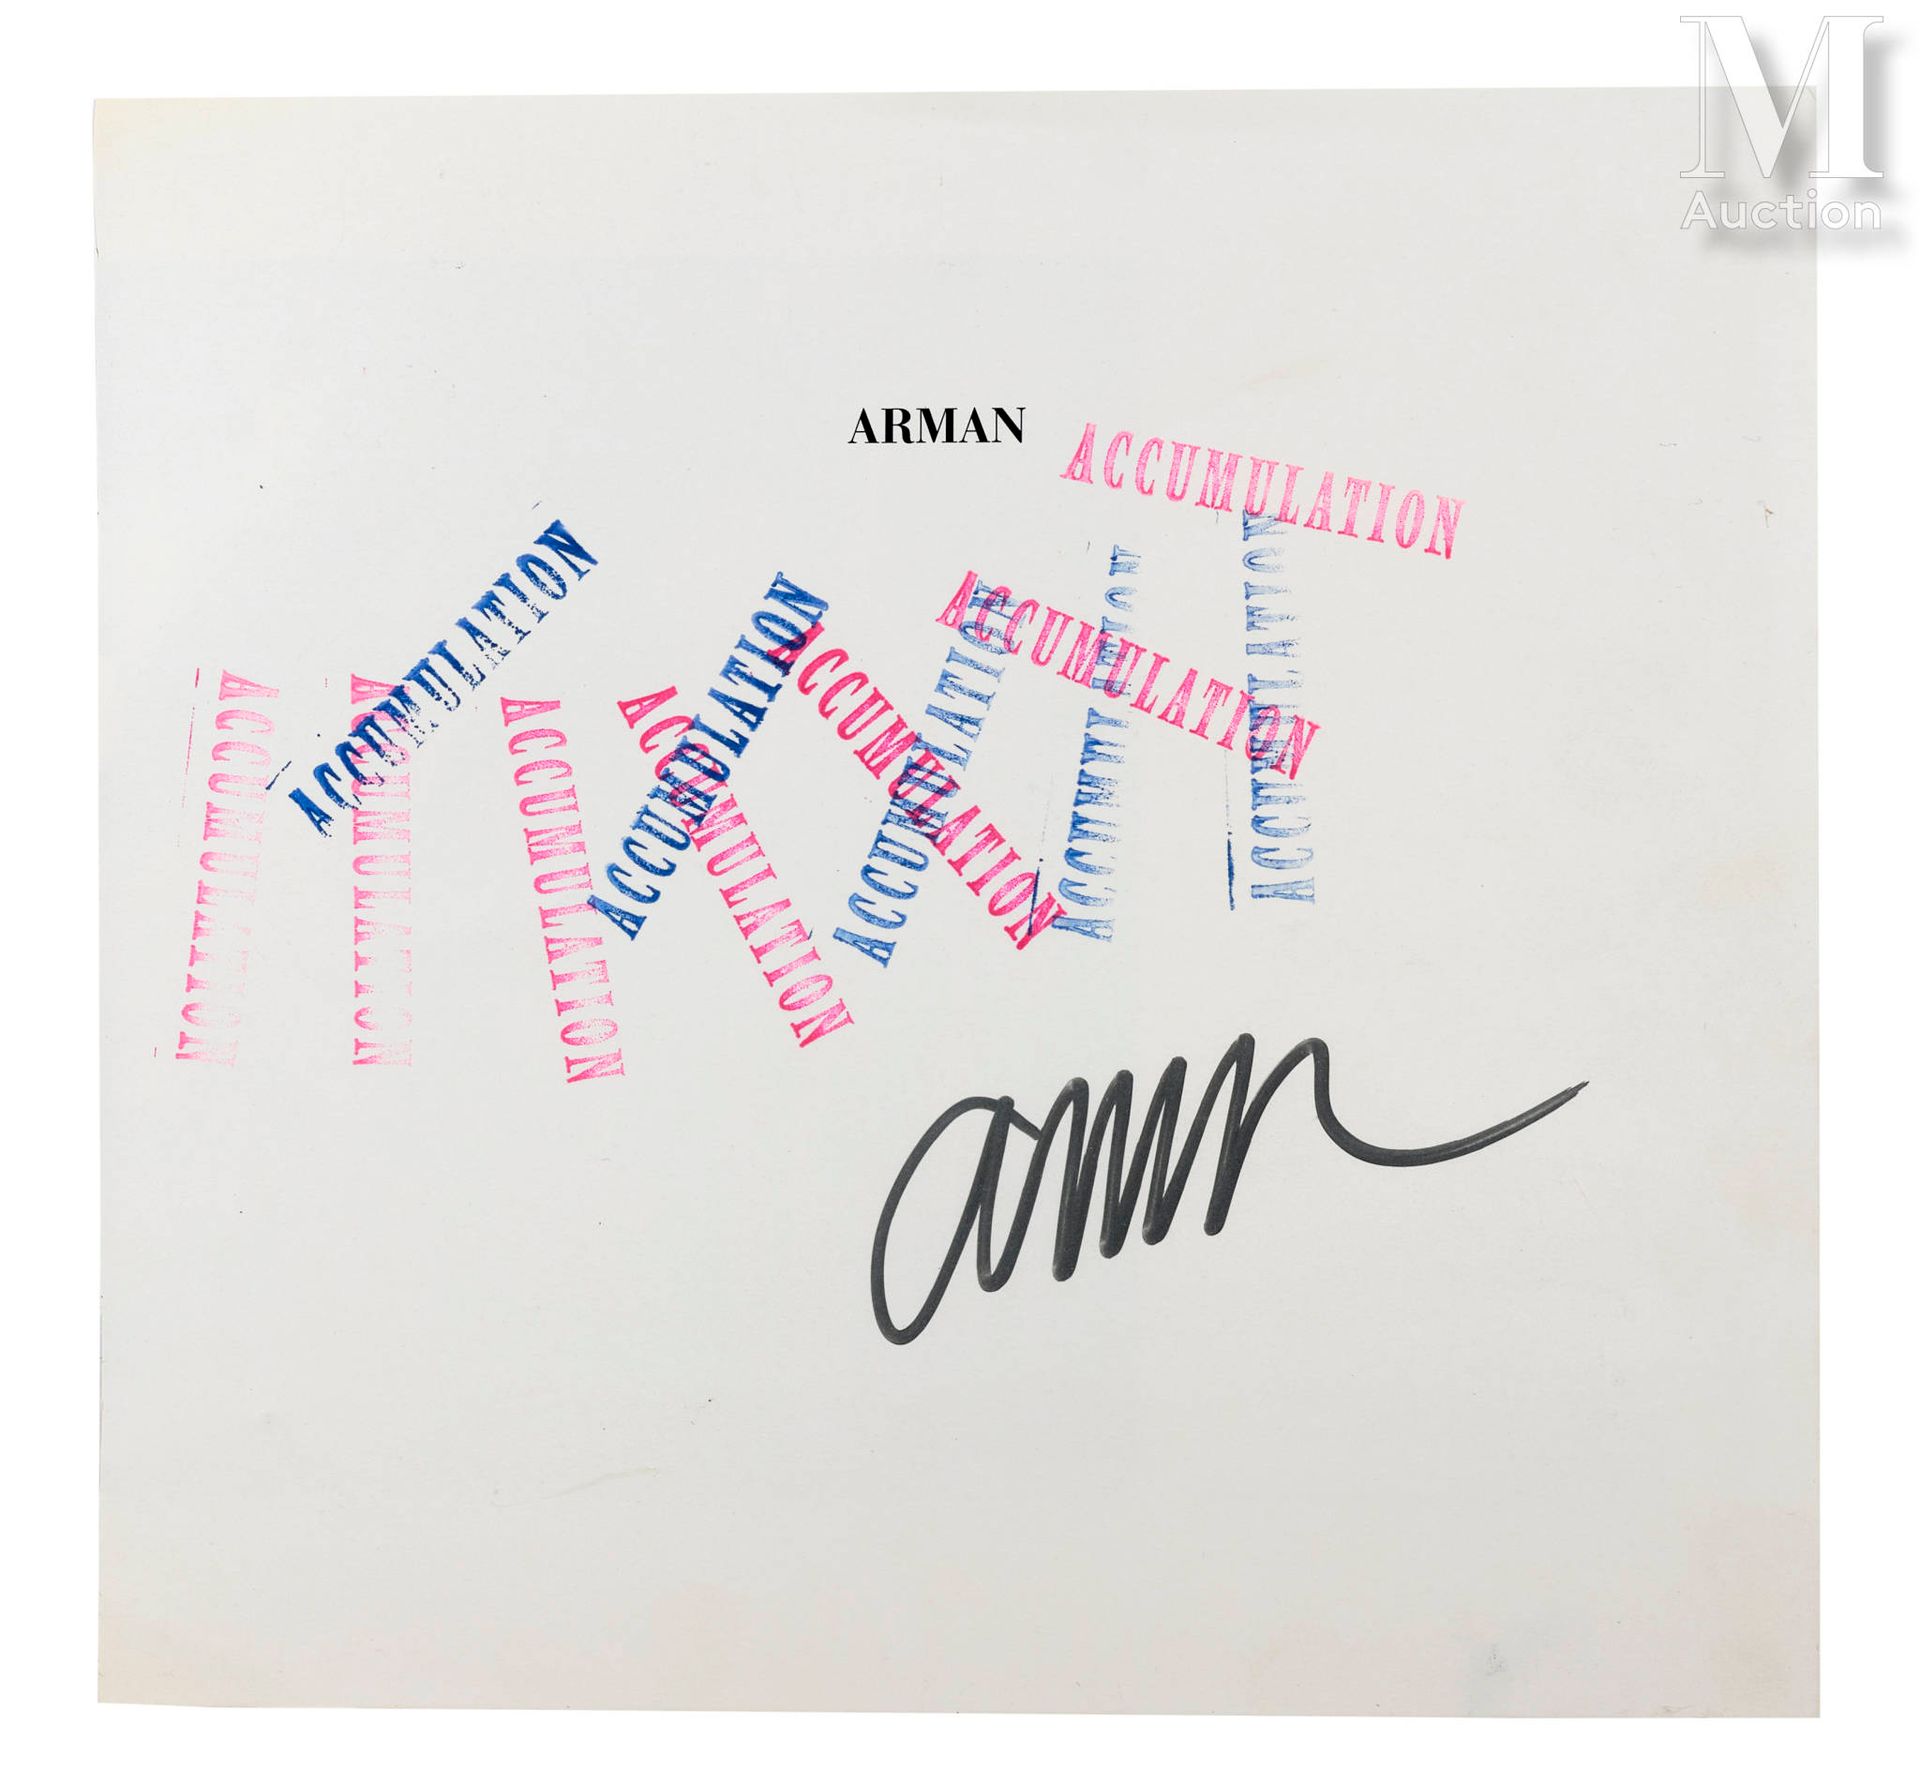 ARMAN (1928-2005) 积累

纸上邮票印刷品
27 x 28.5 cm
右下角署名：AM